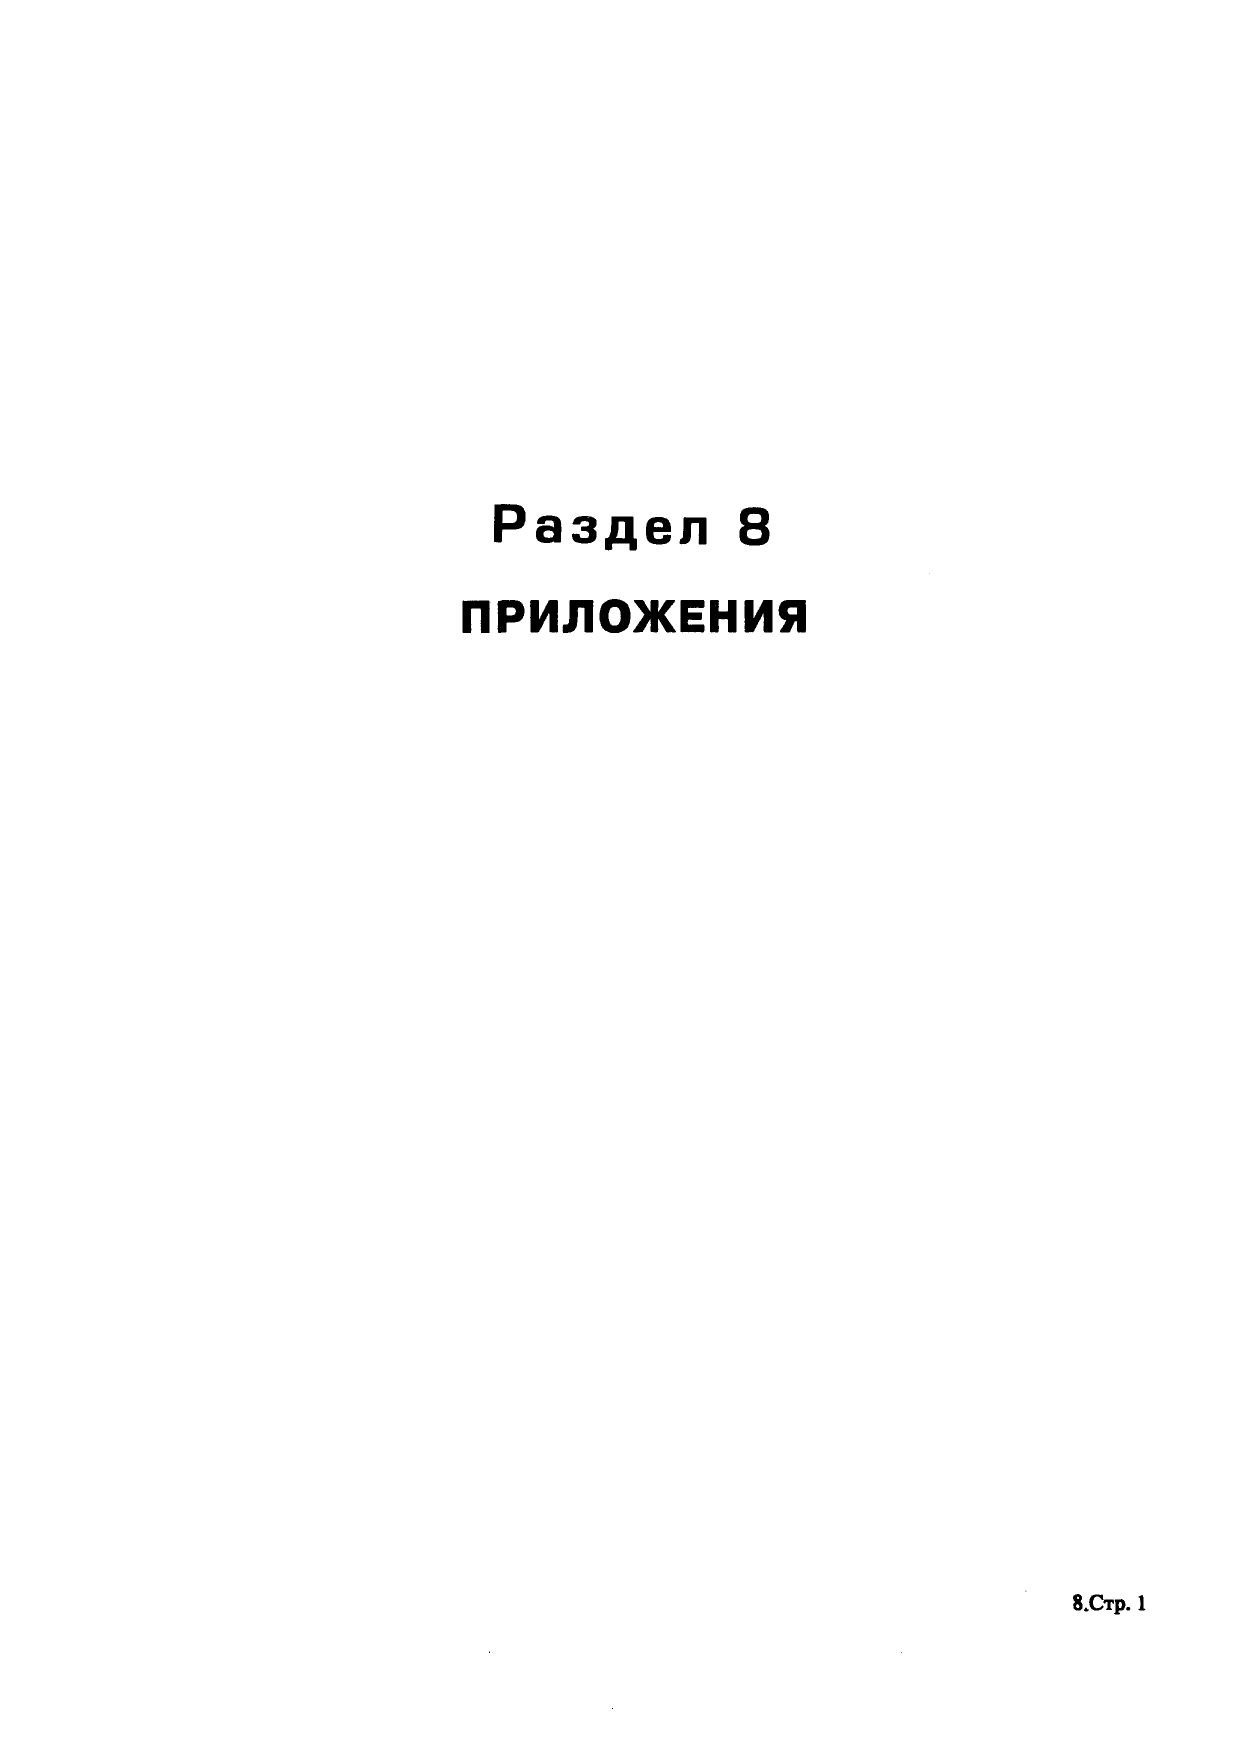 Tu-134_RLYE_kn2_448